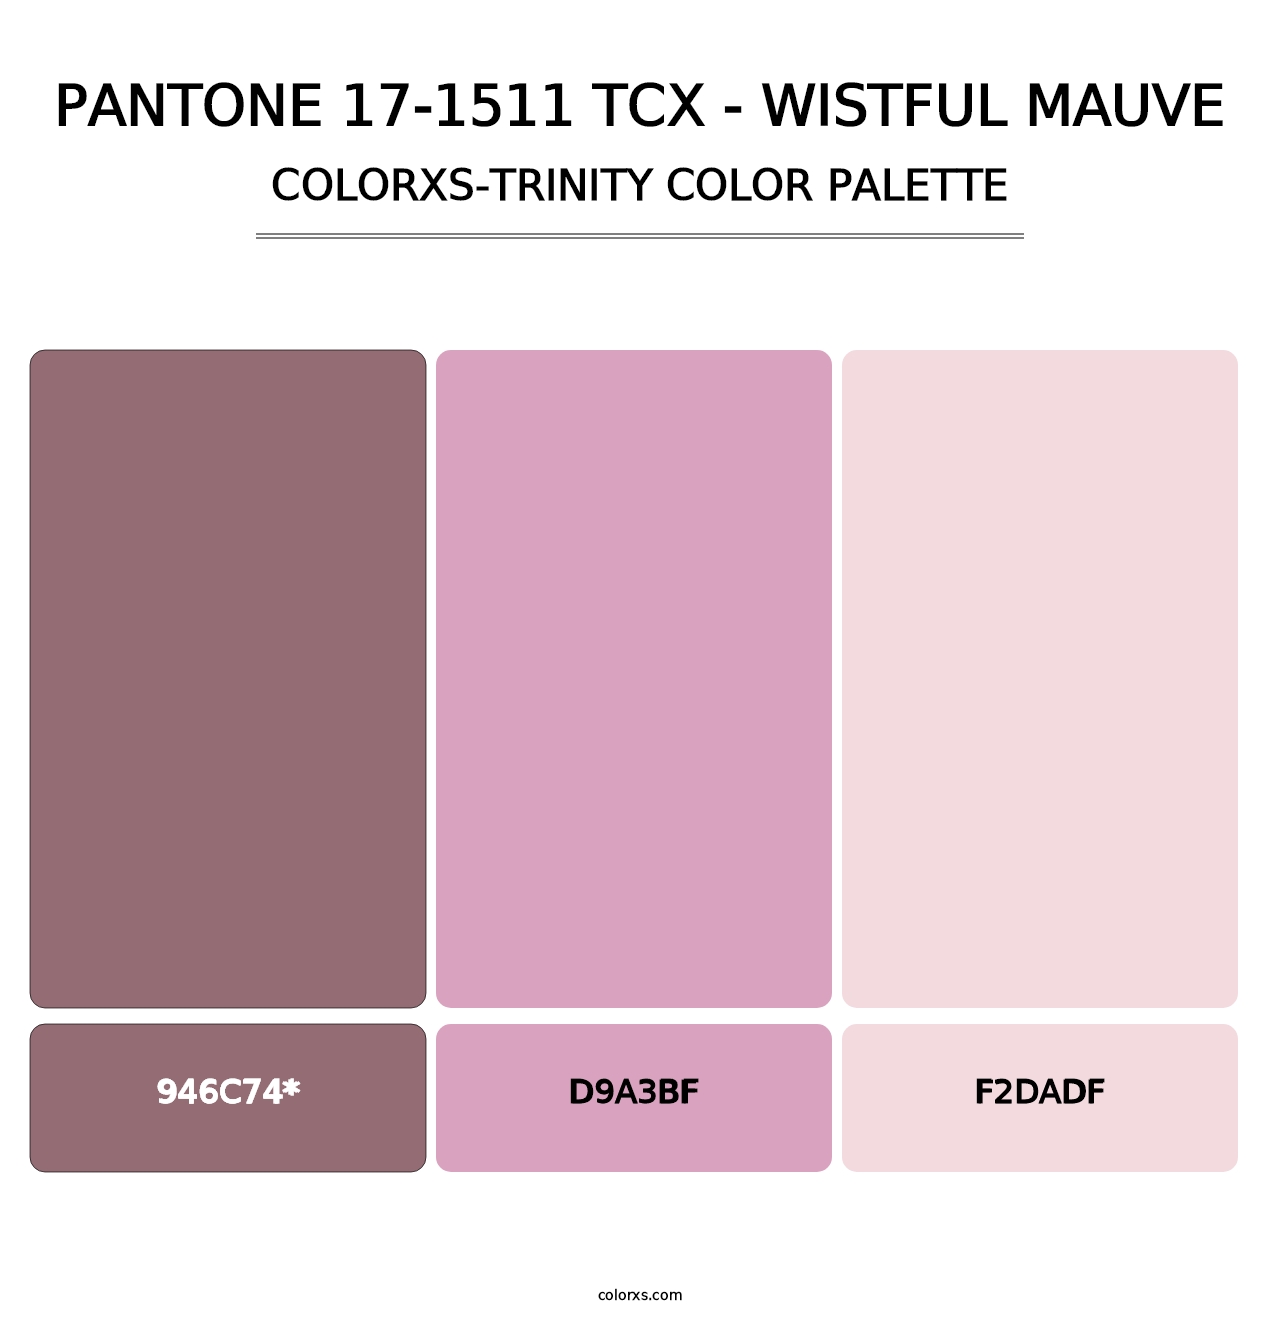 PANTONE 17-1511 TCX - Wistful Mauve - Colorxs Trinity Palette